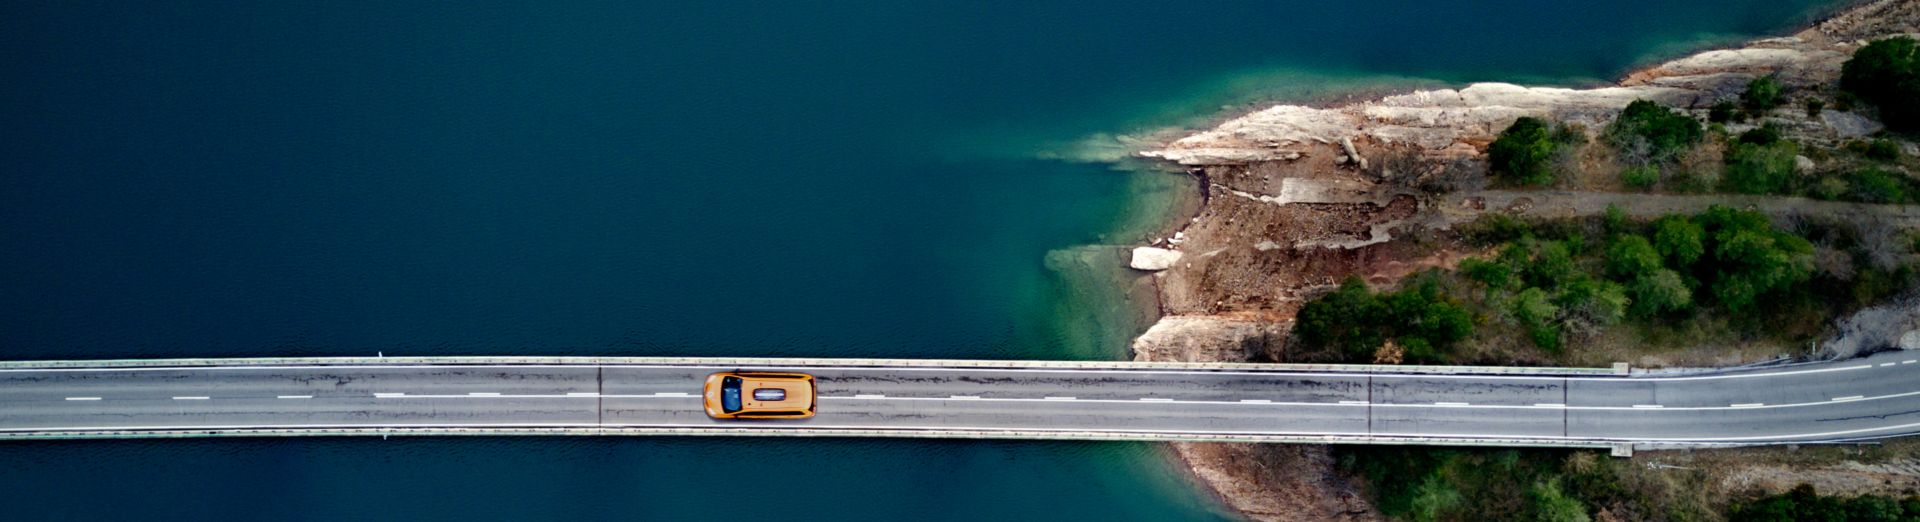 Car driving on bridge across blue water